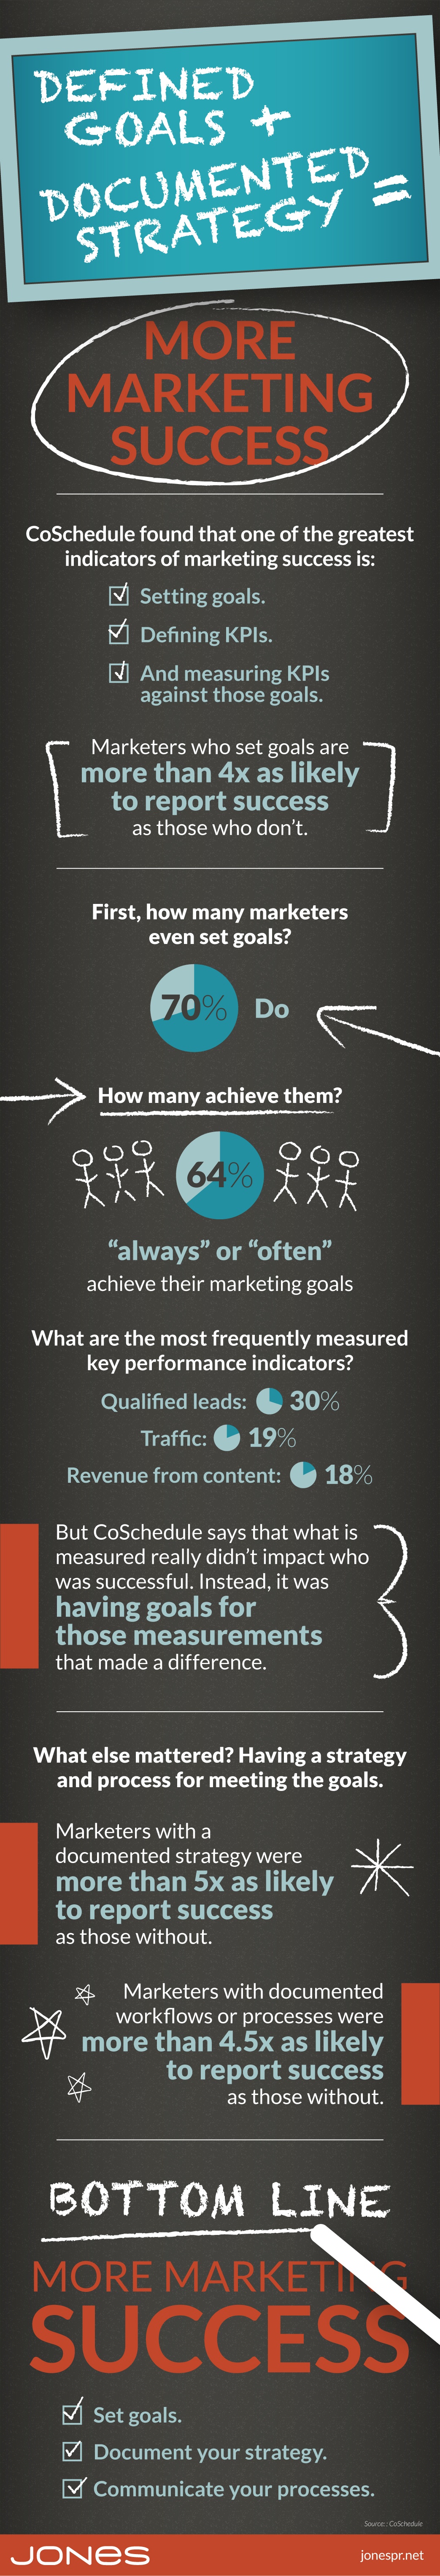 jones-infographic-marketing-goals-success